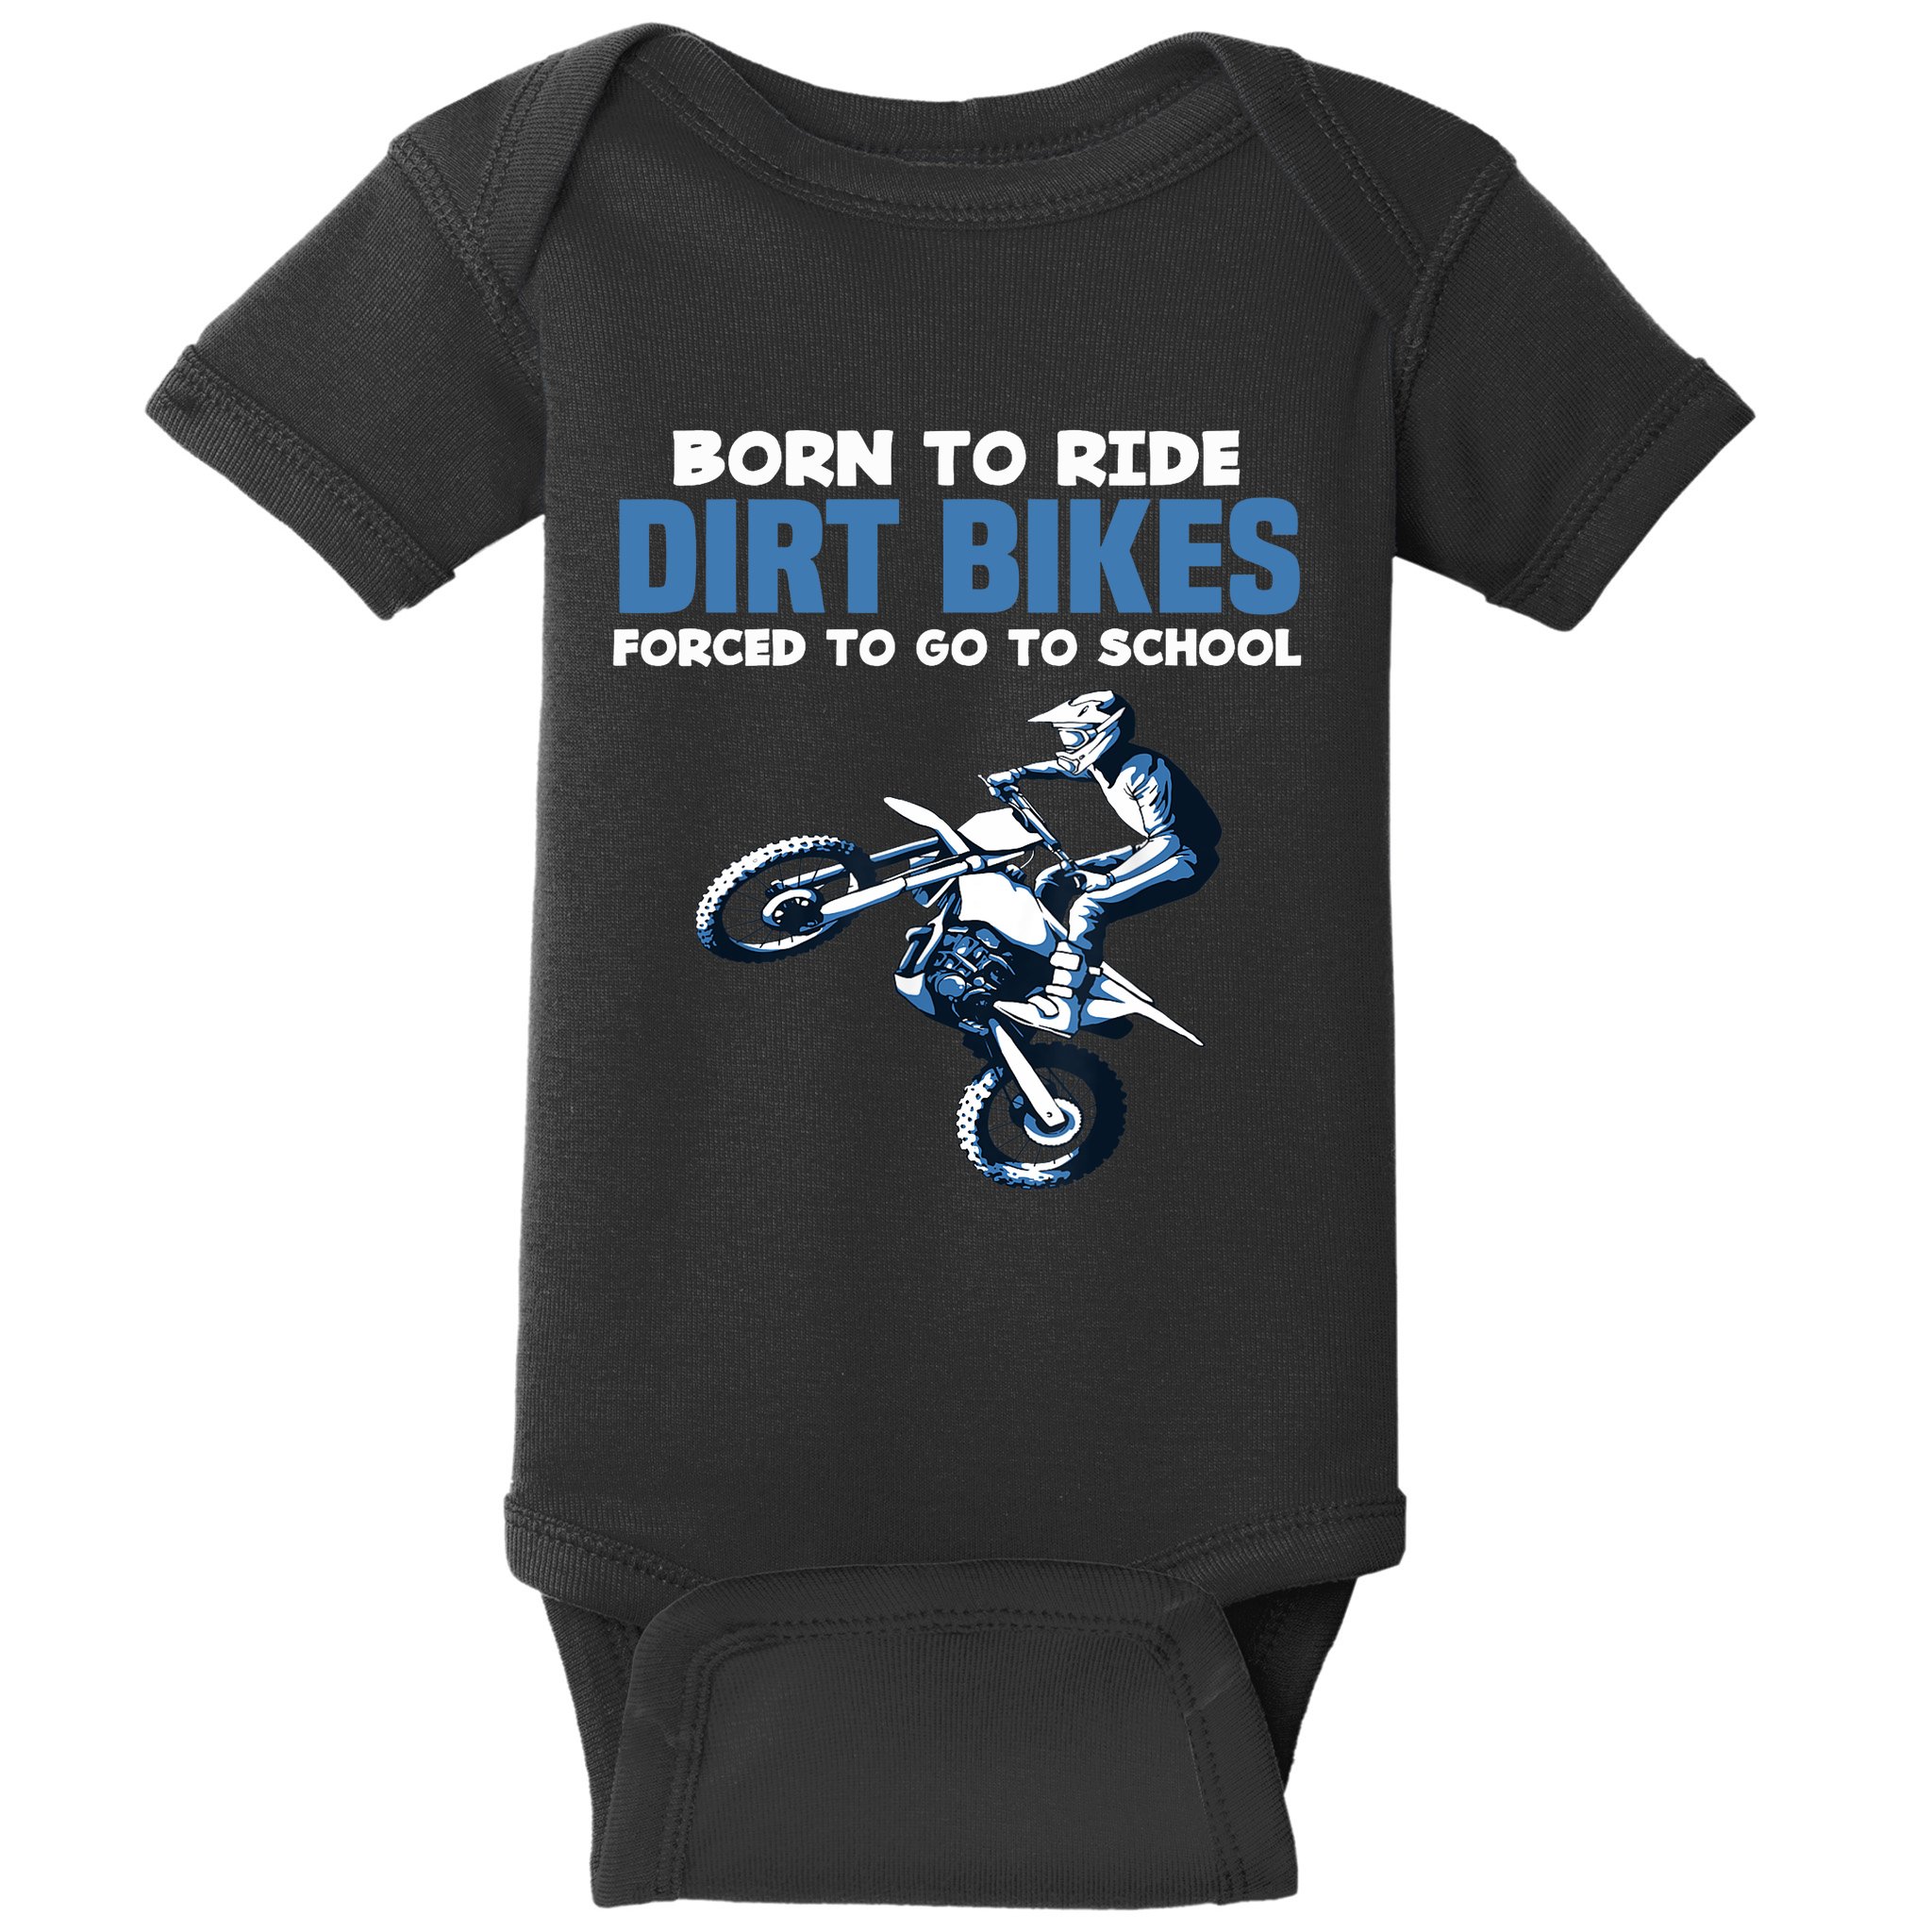 Future Motocross Rider Baby Bodysuit